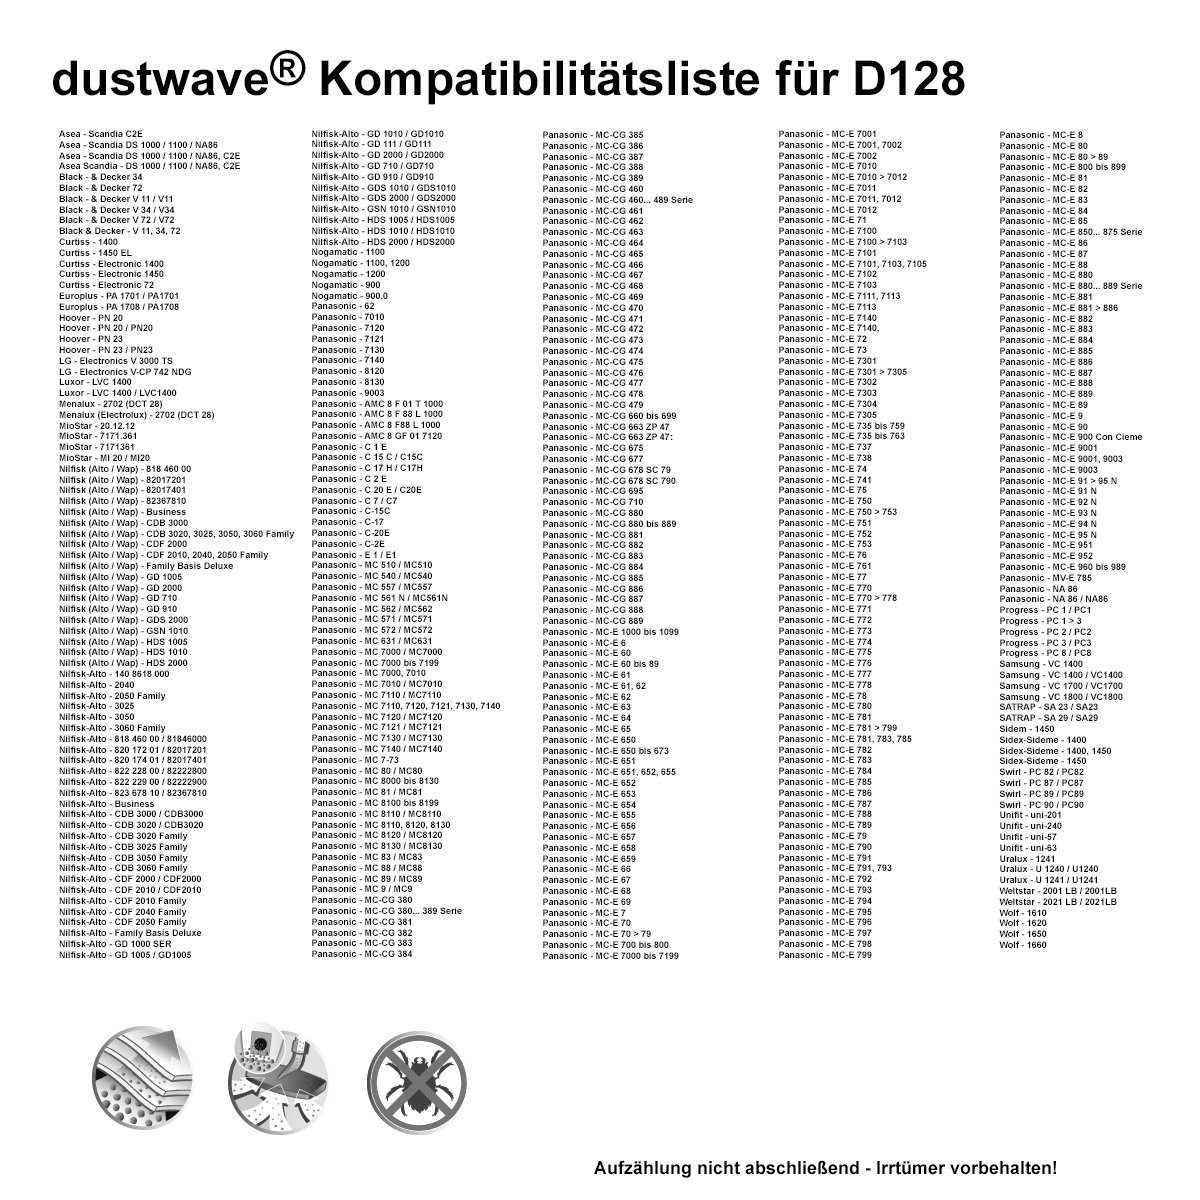 Staubsaugerbeutel 1 8120, 15x15cm Test-Set, zuschneidbar) MC Dustwave (ca. - 8130, Test-Set, St., 8110, + Staubsaugerbeutel 1 passend Panasonic 1 für Hepa-Filter